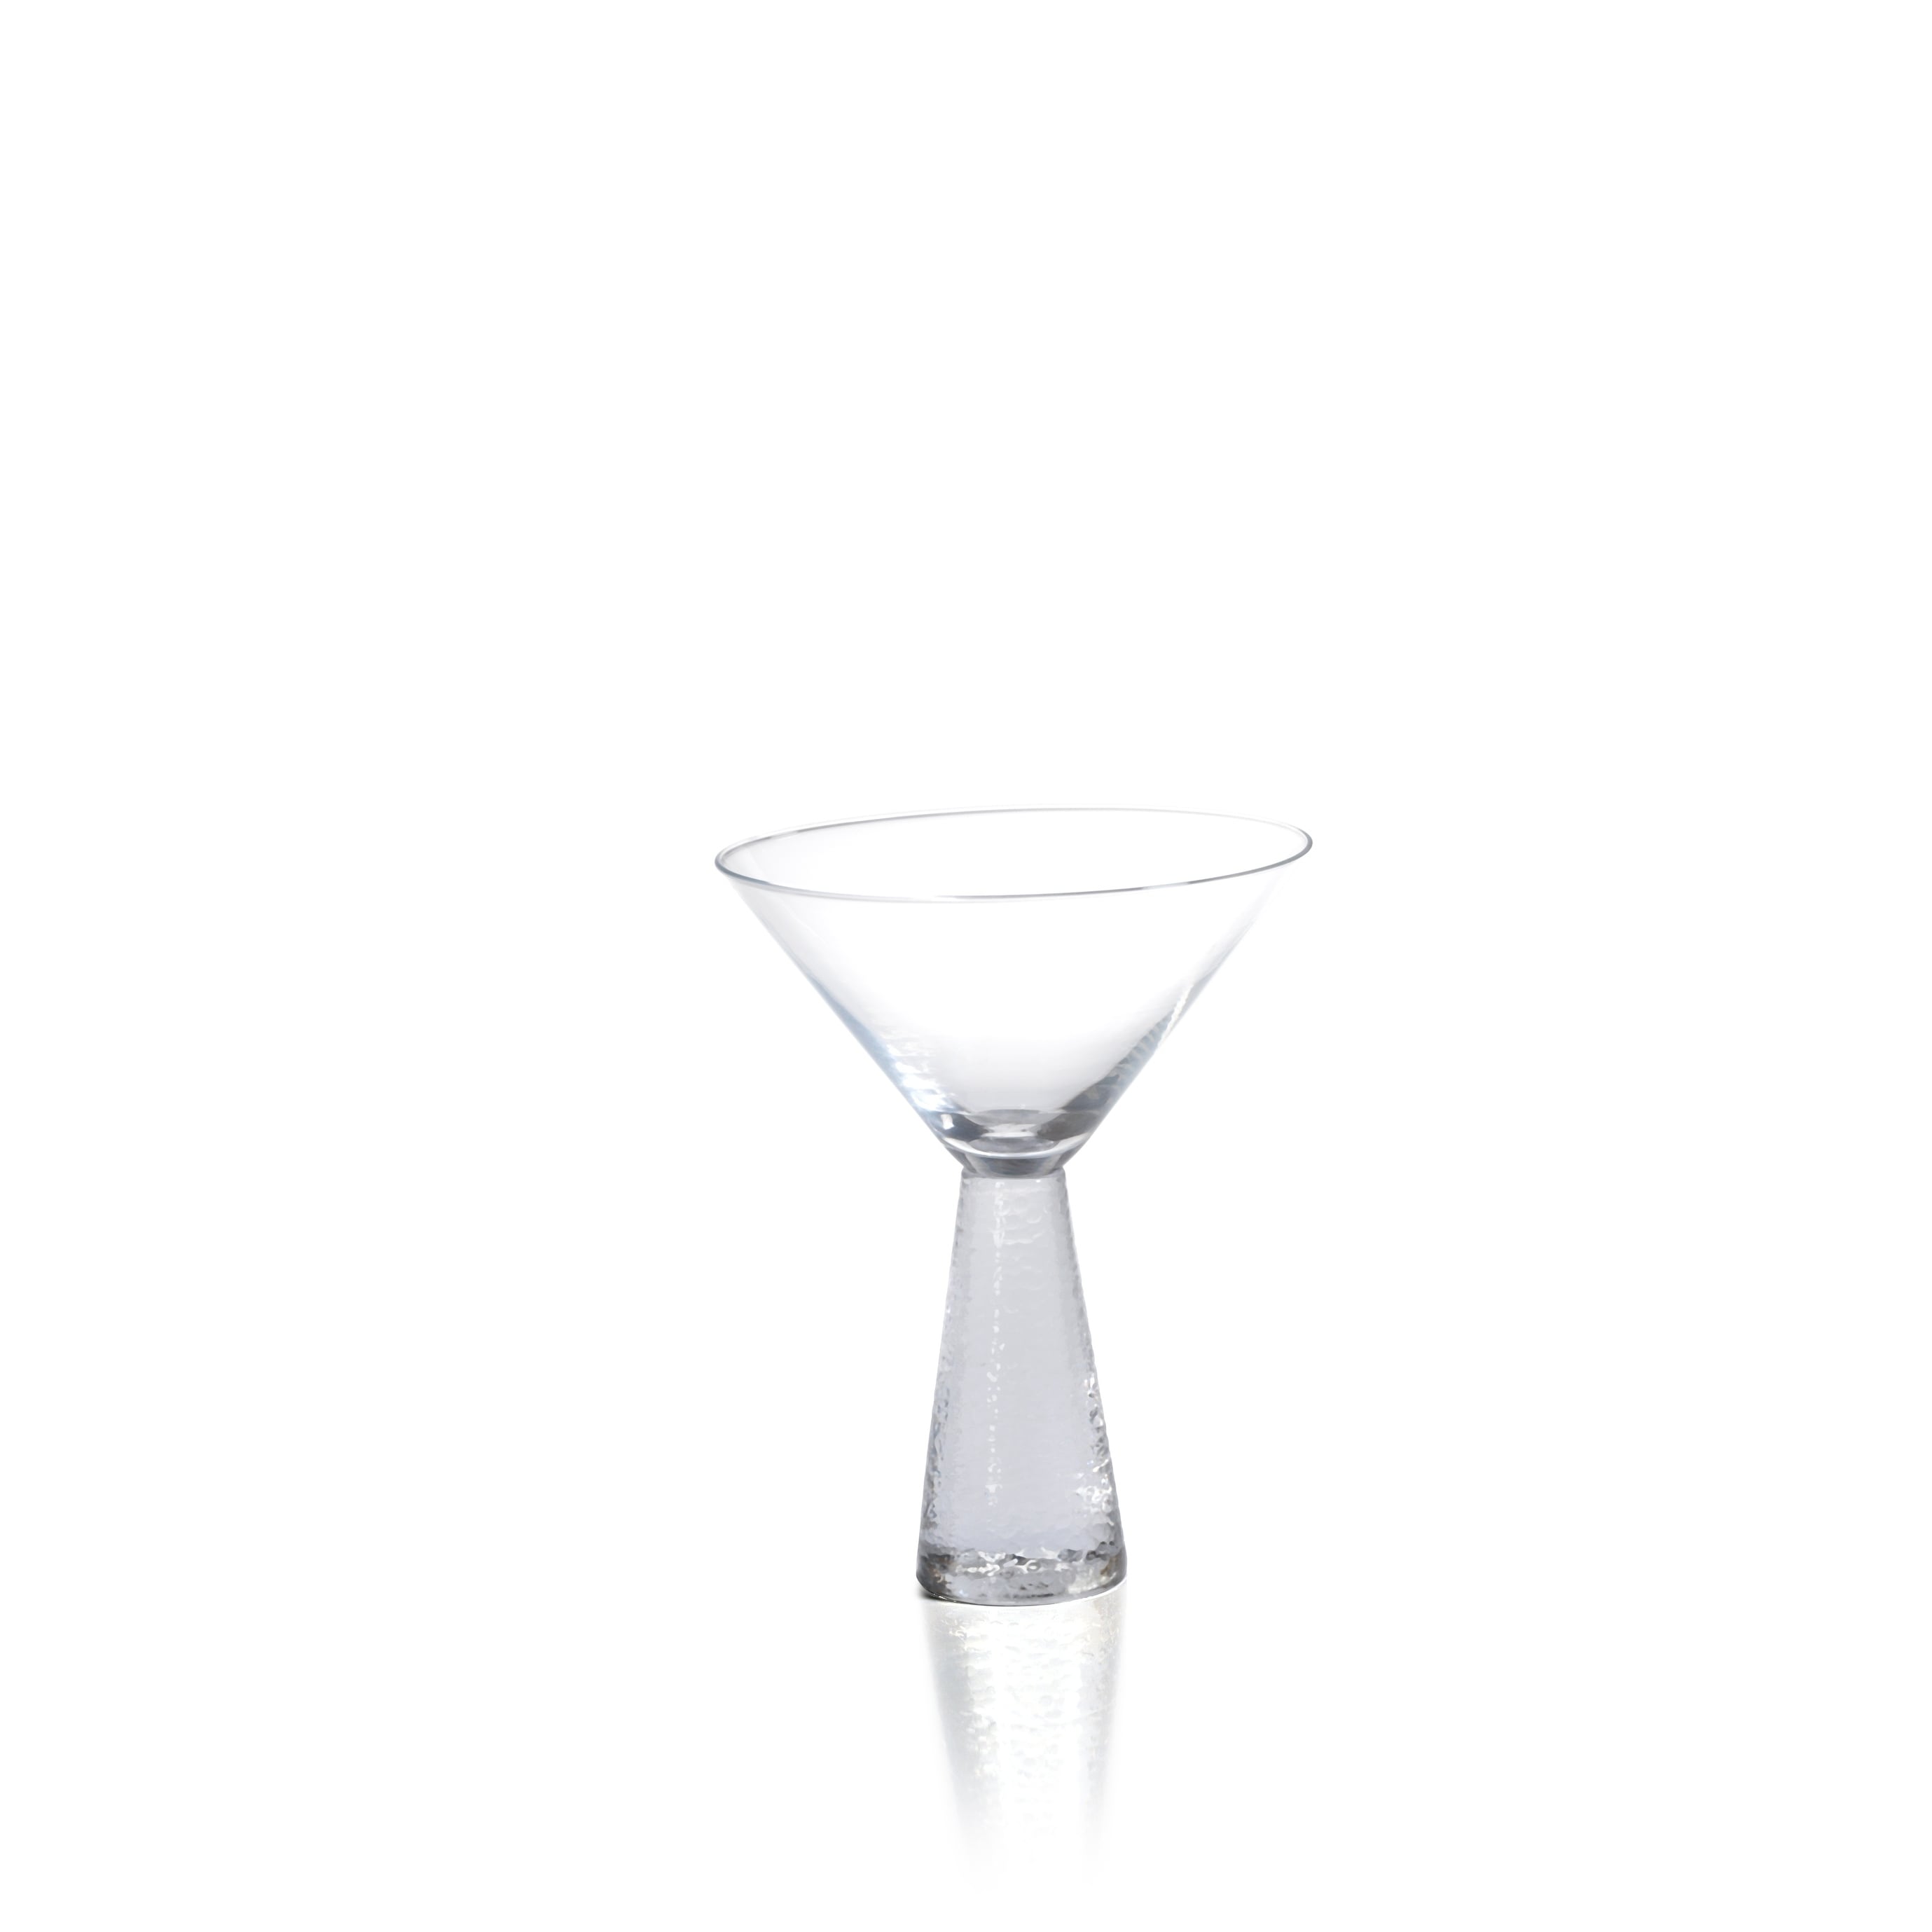 Juvale Martini Glasses - Set of 6 Clear Classic 5-Ounce Cocktail Glasses Nib